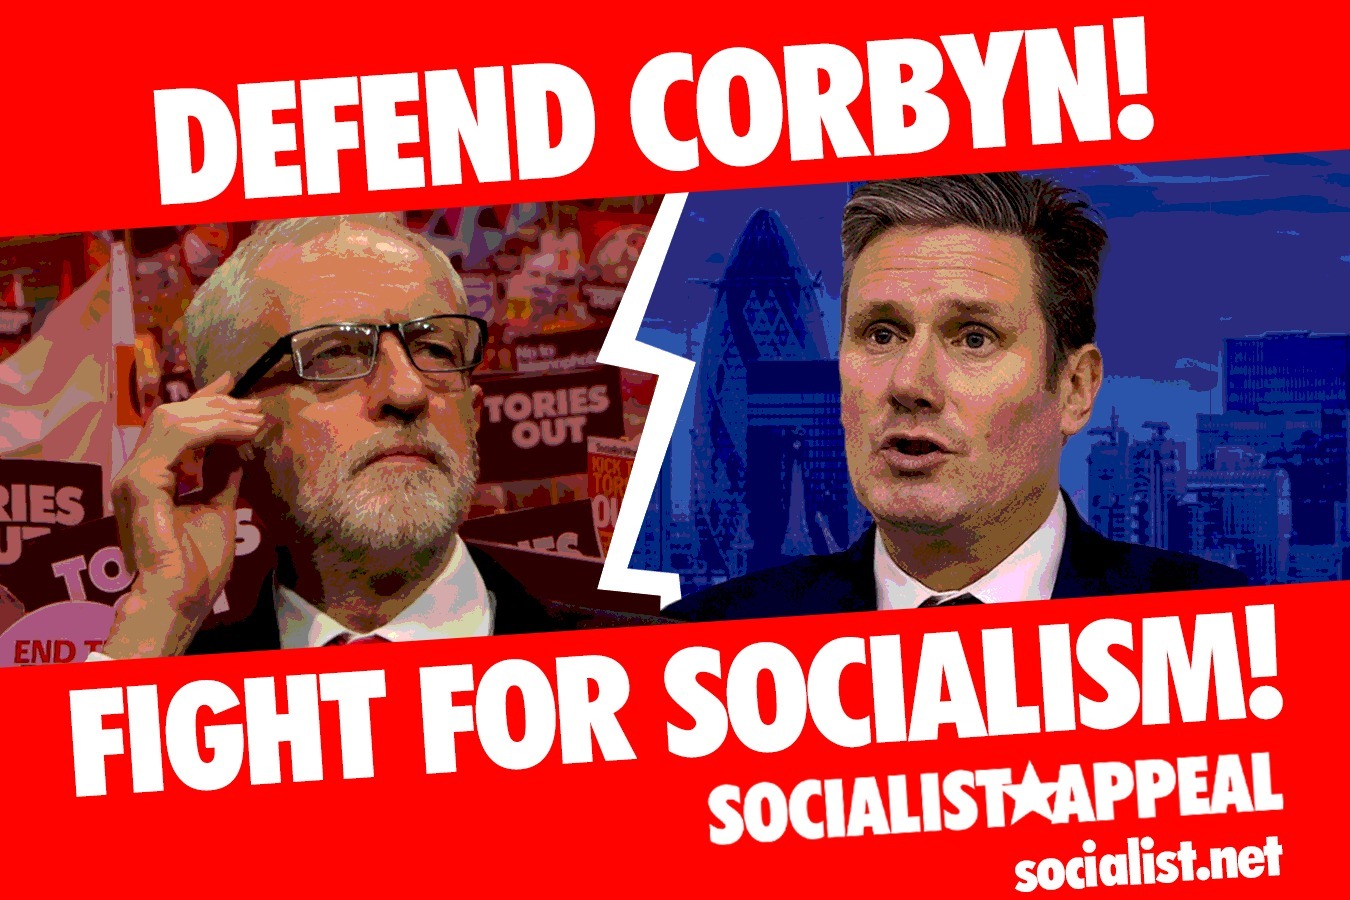 Defend Corbyn Fight for Socialism website